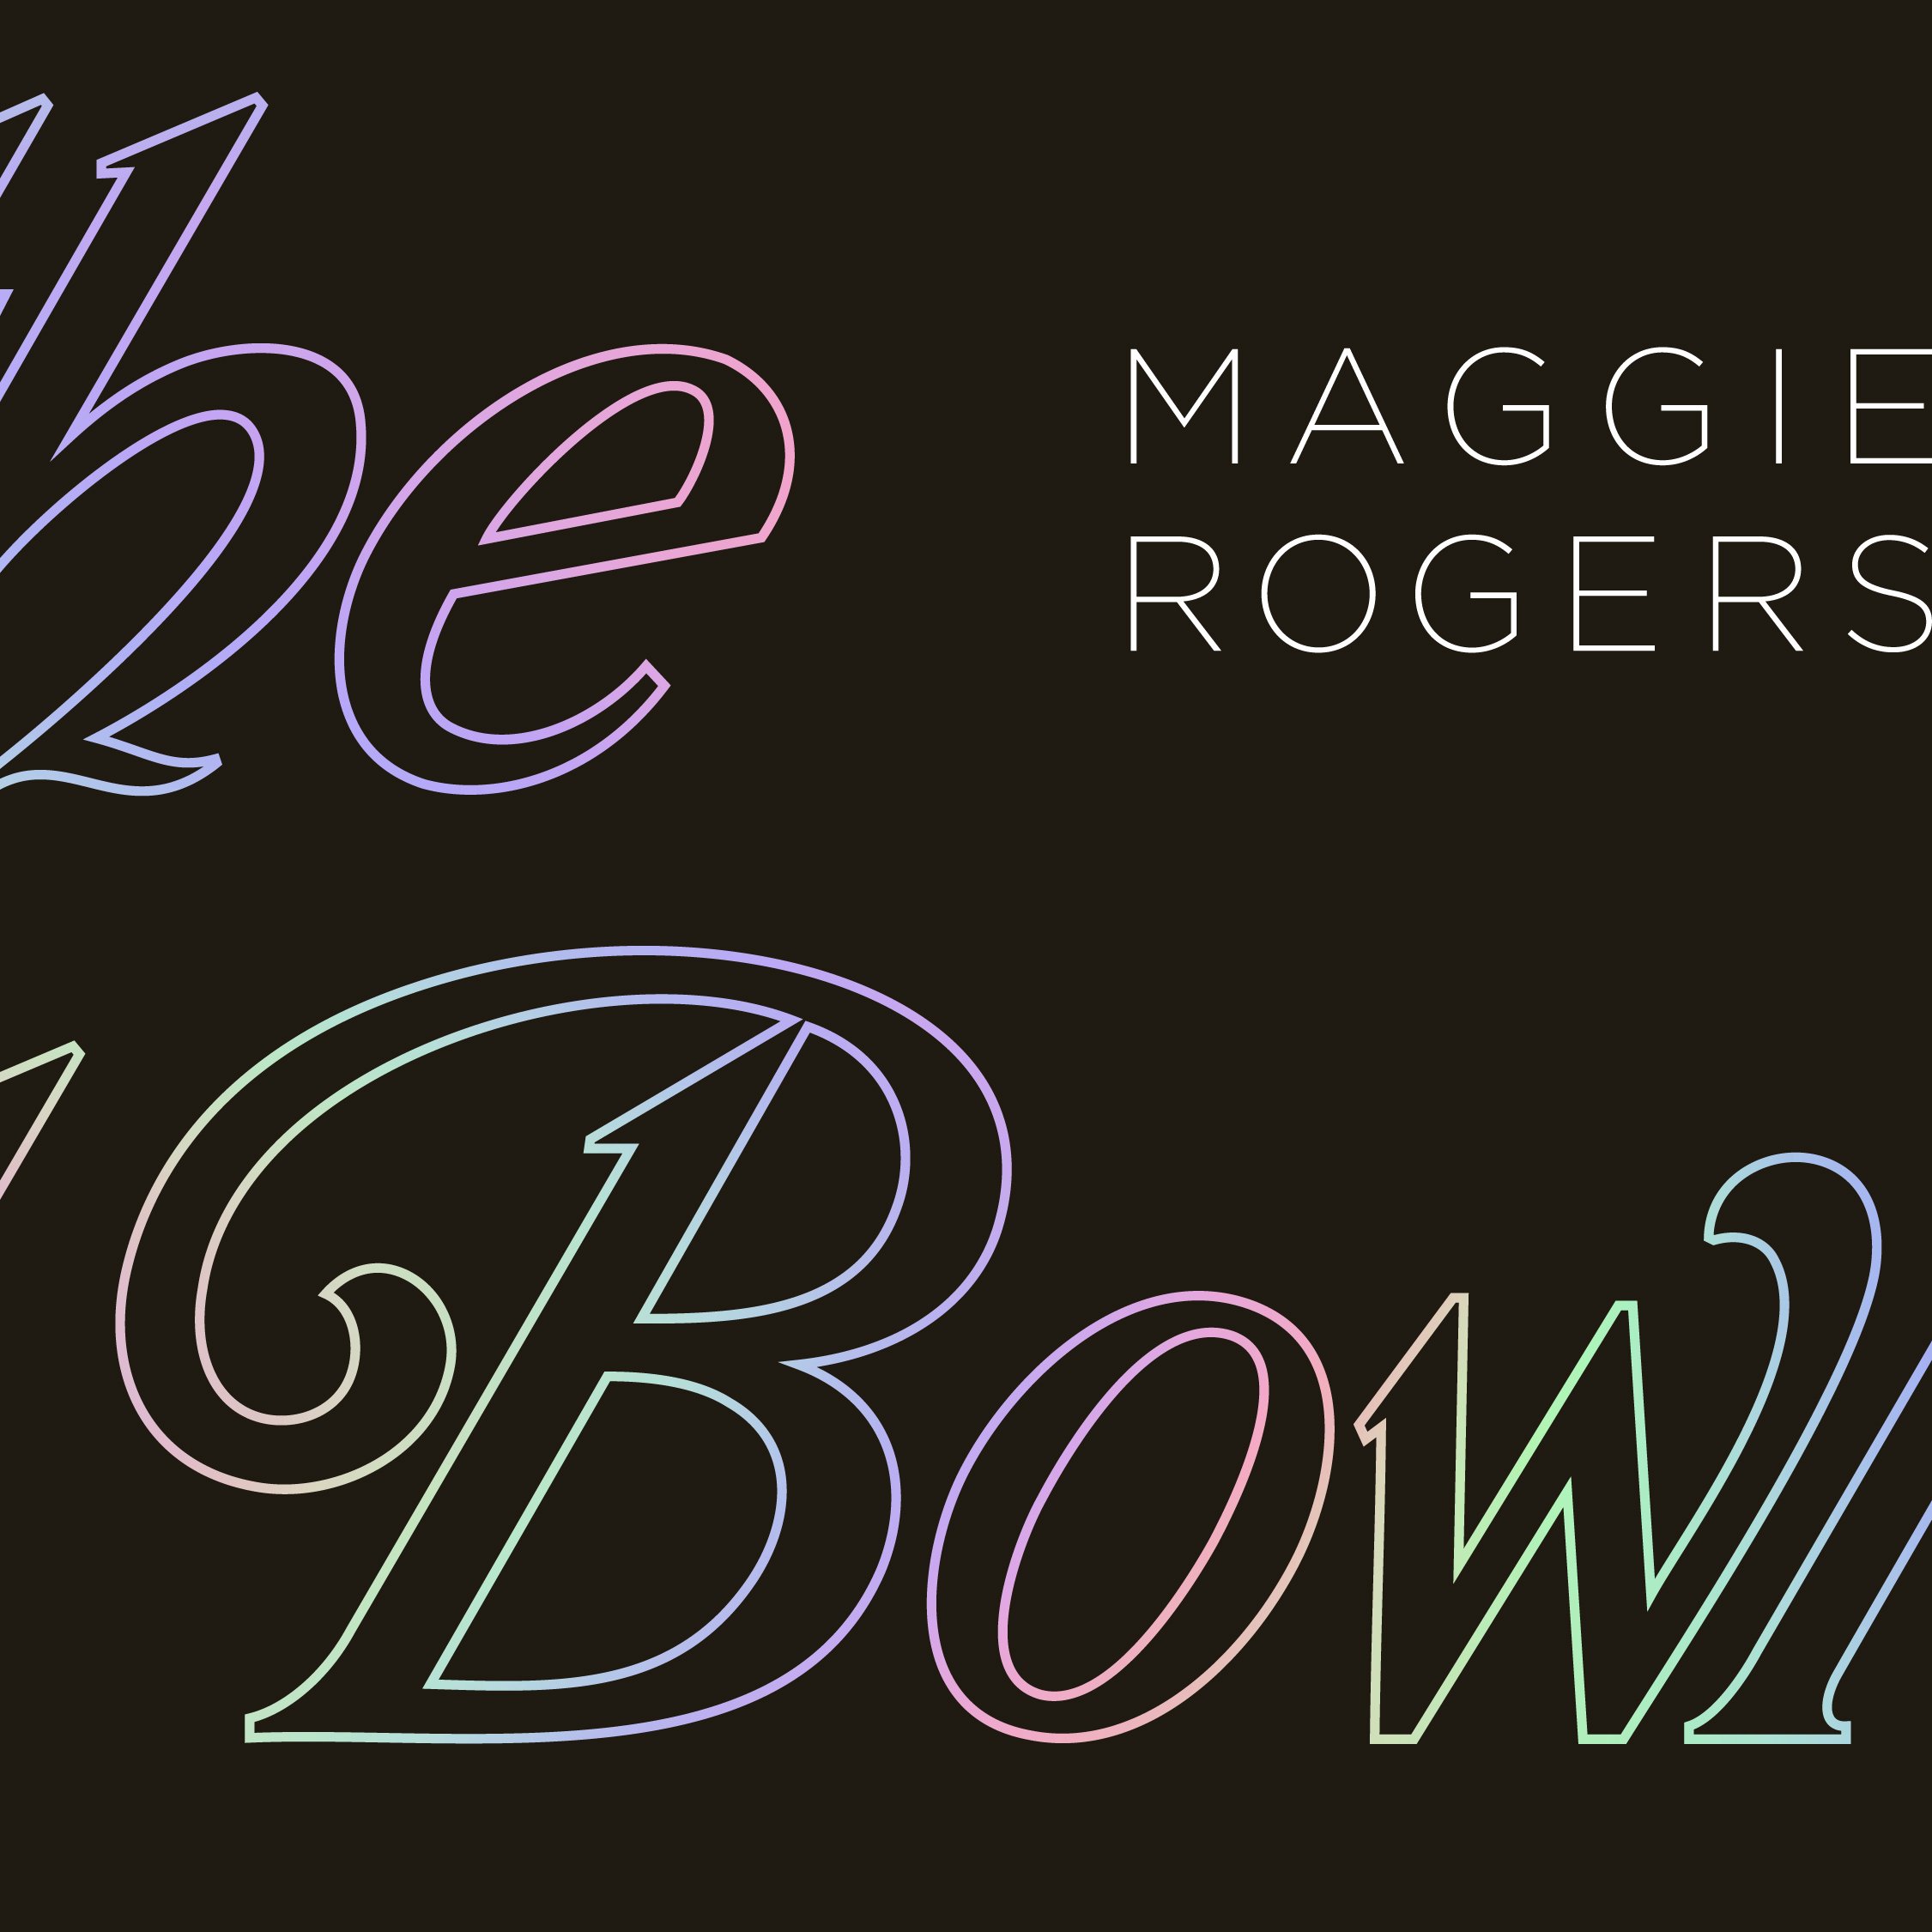 MaggieRogers_IG-04.jpg